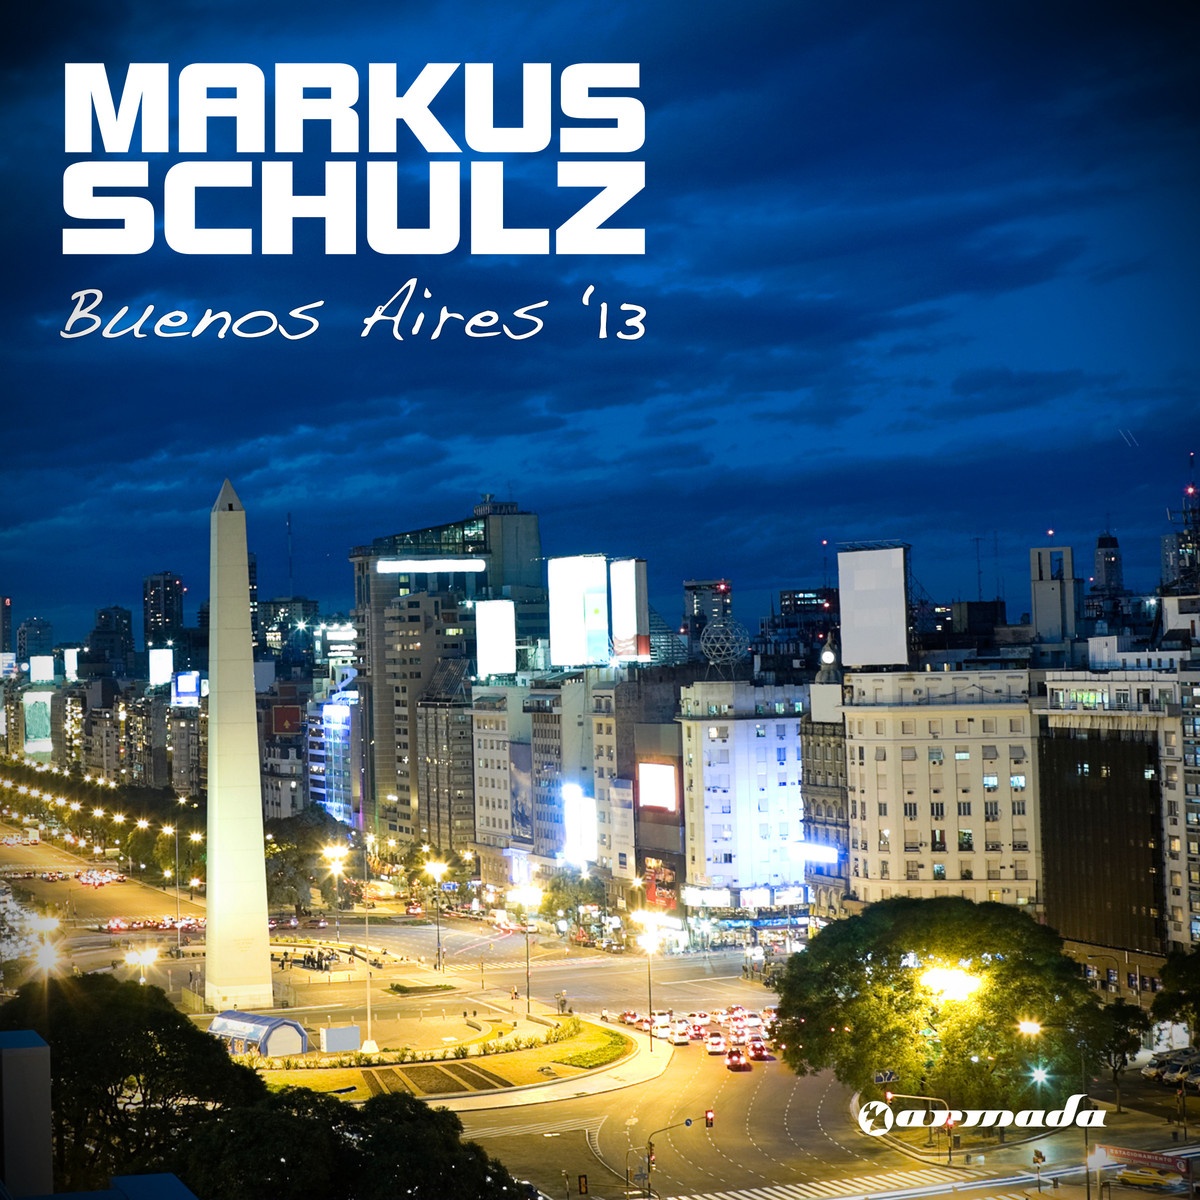 Buenos Aires '13 (Full Continuous DJ Mix, Pt. 2)